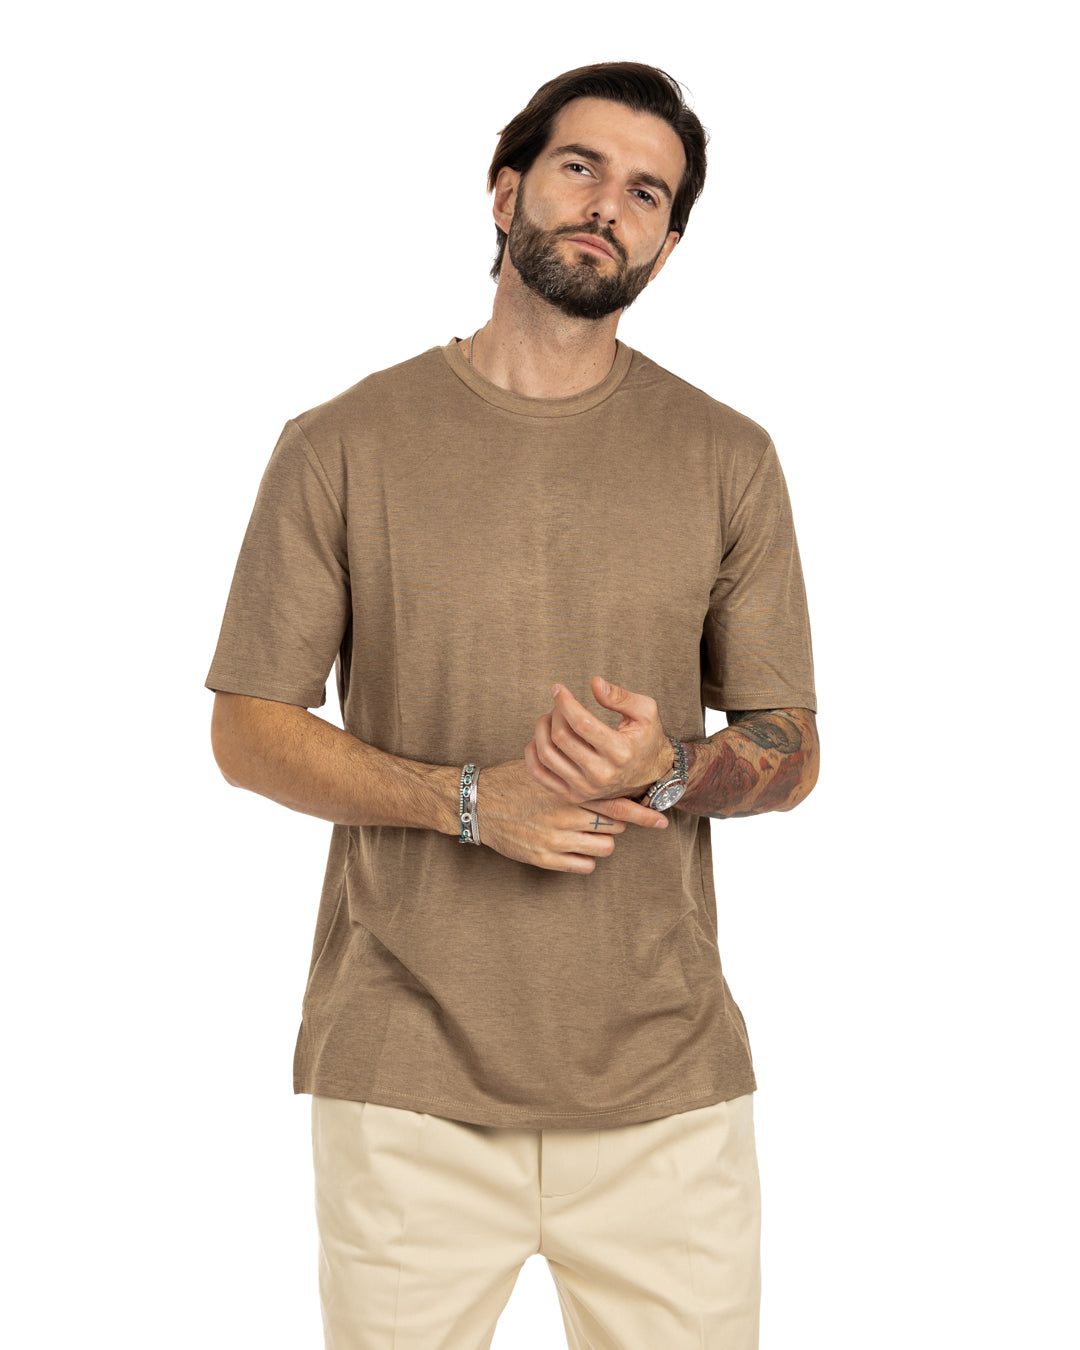 Tee - t-shirt basique texturé camel